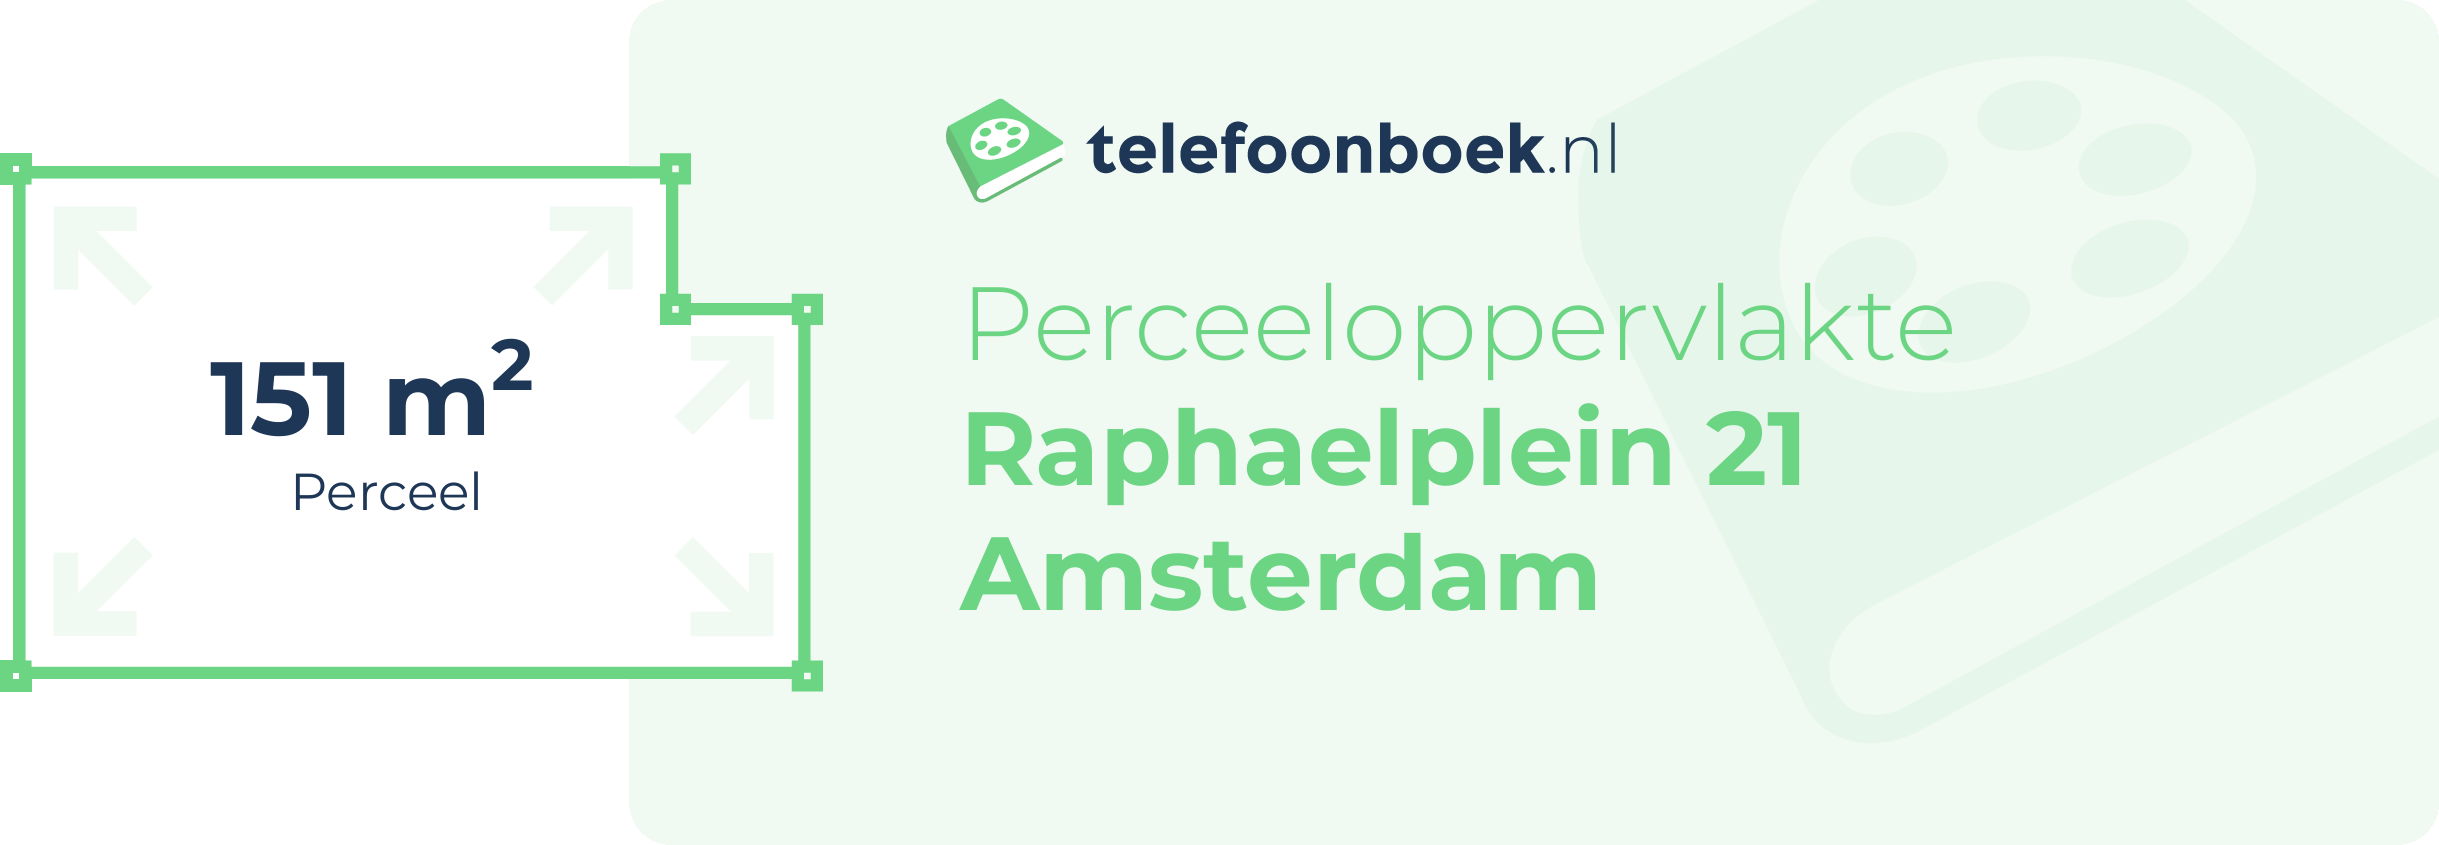 Perceeloppervlakte Raphaelplein 21 Amsterdam